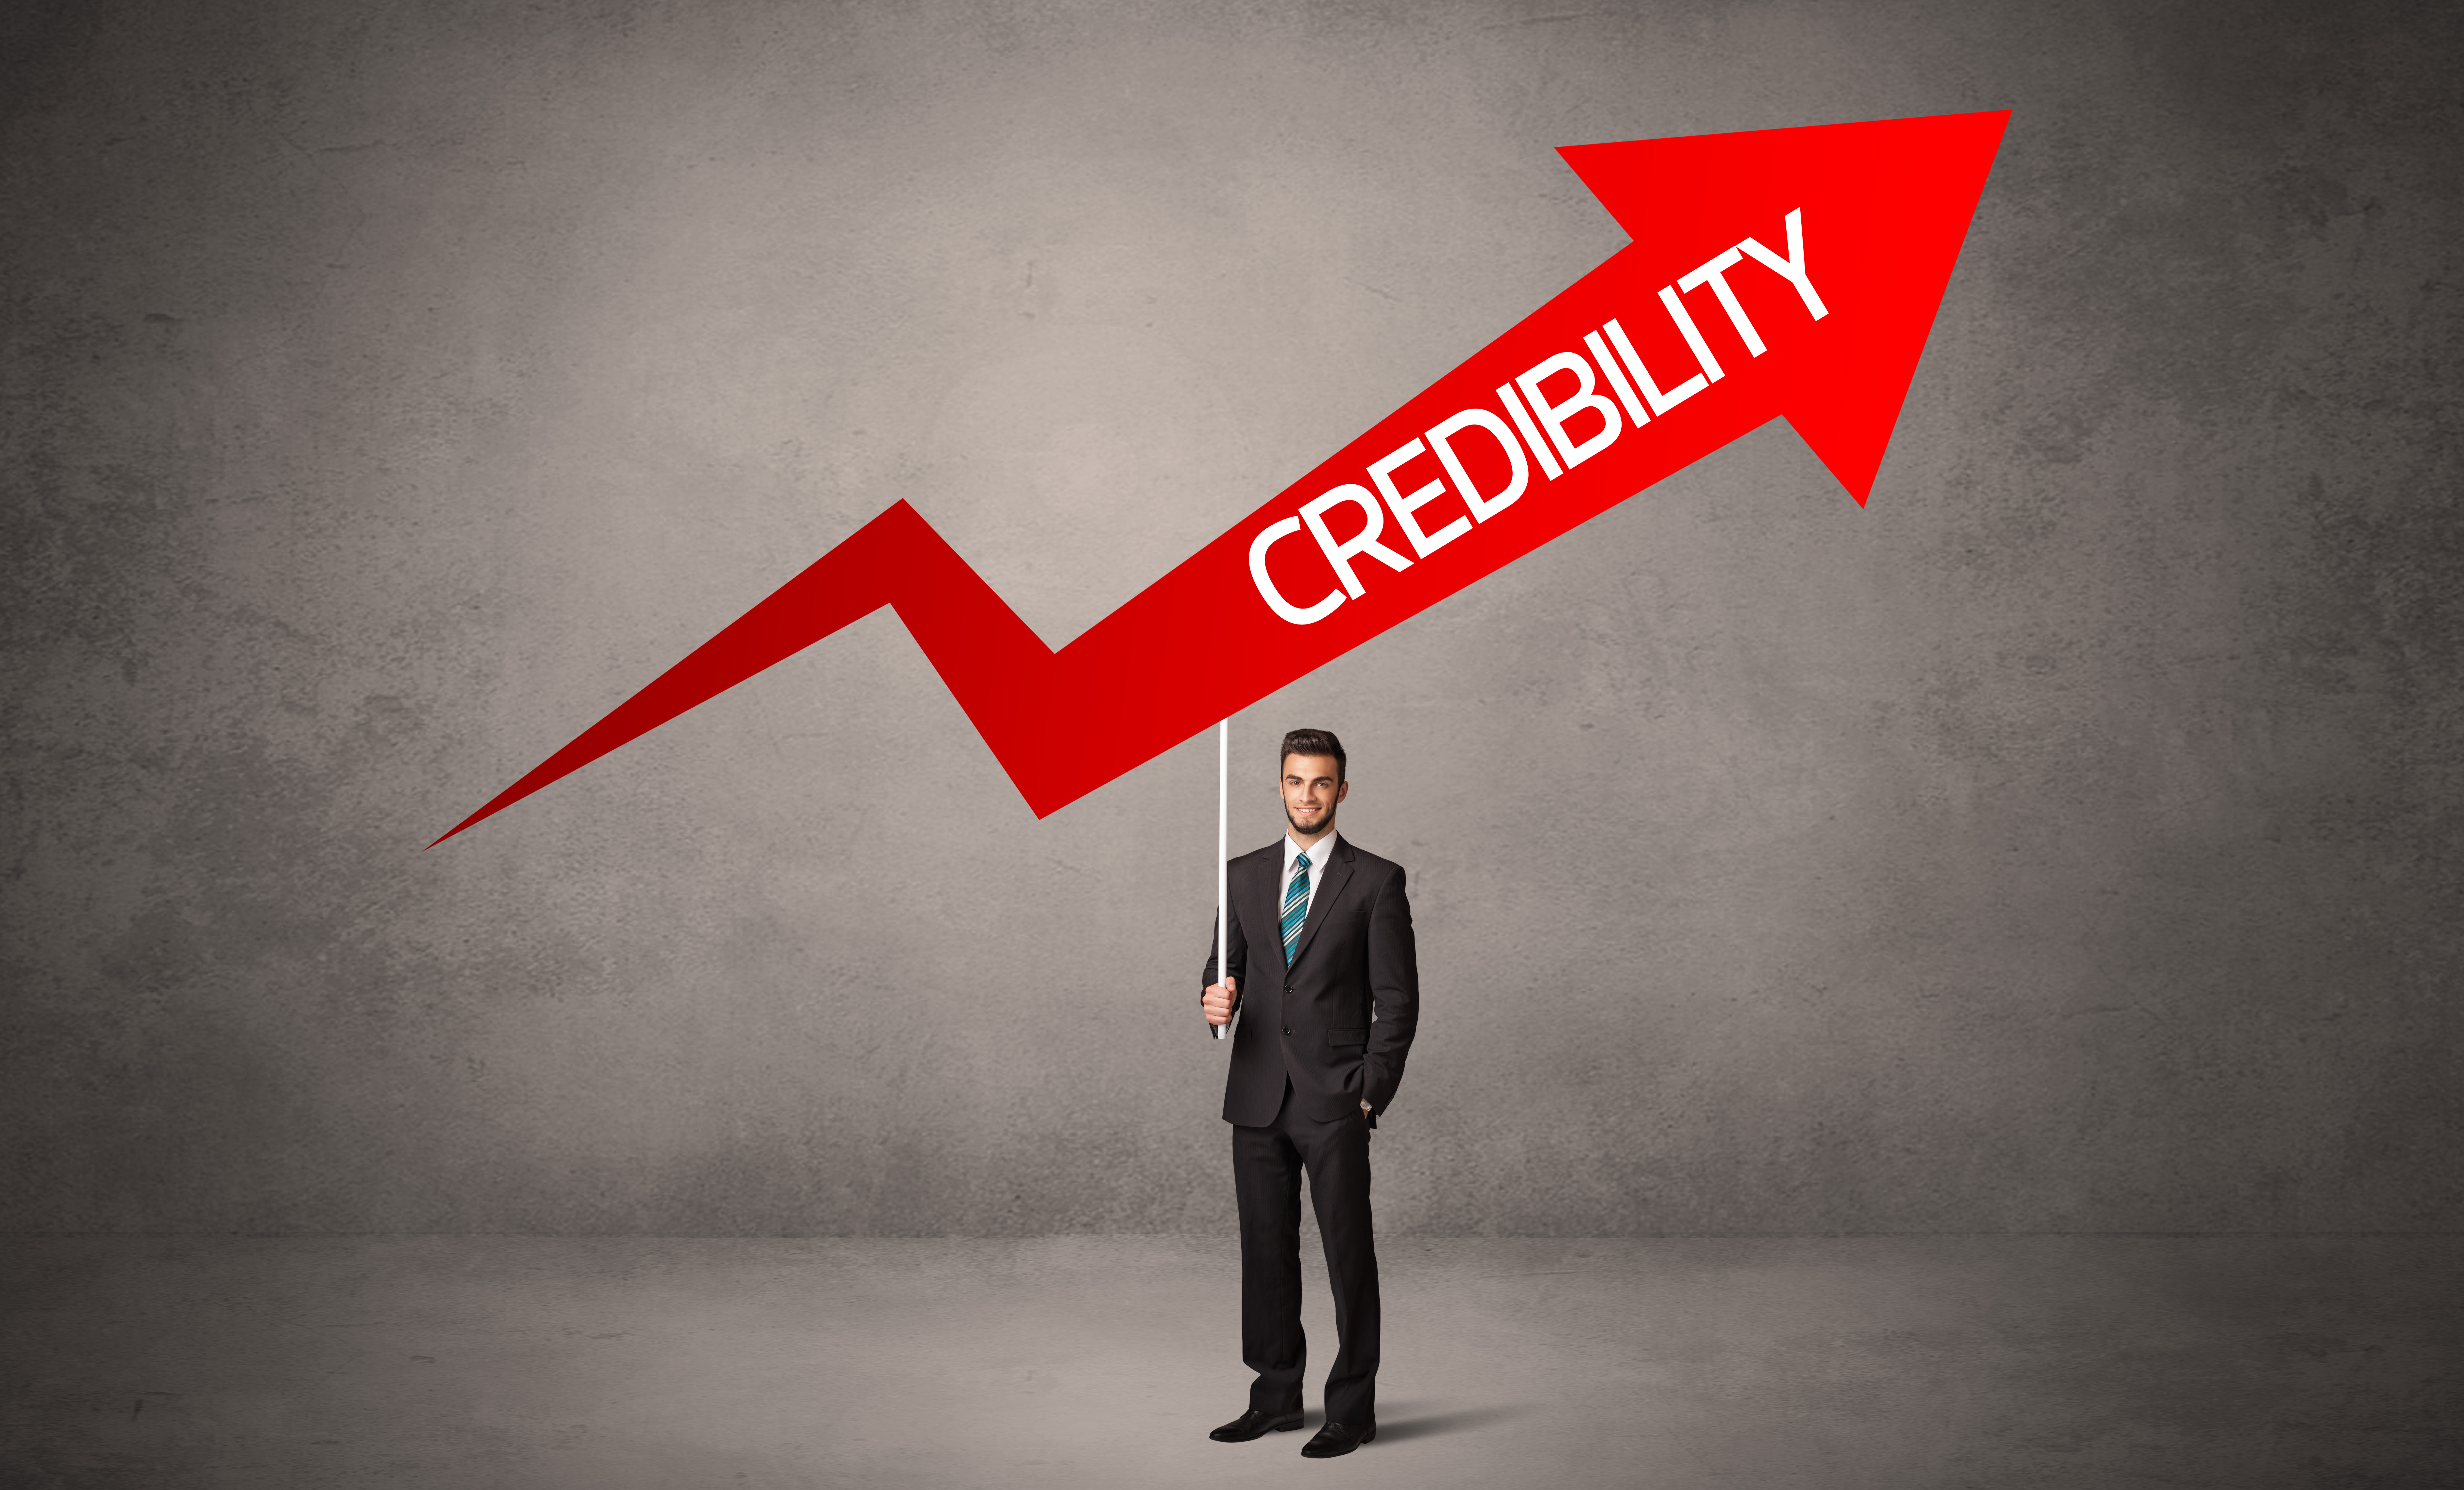 credibility